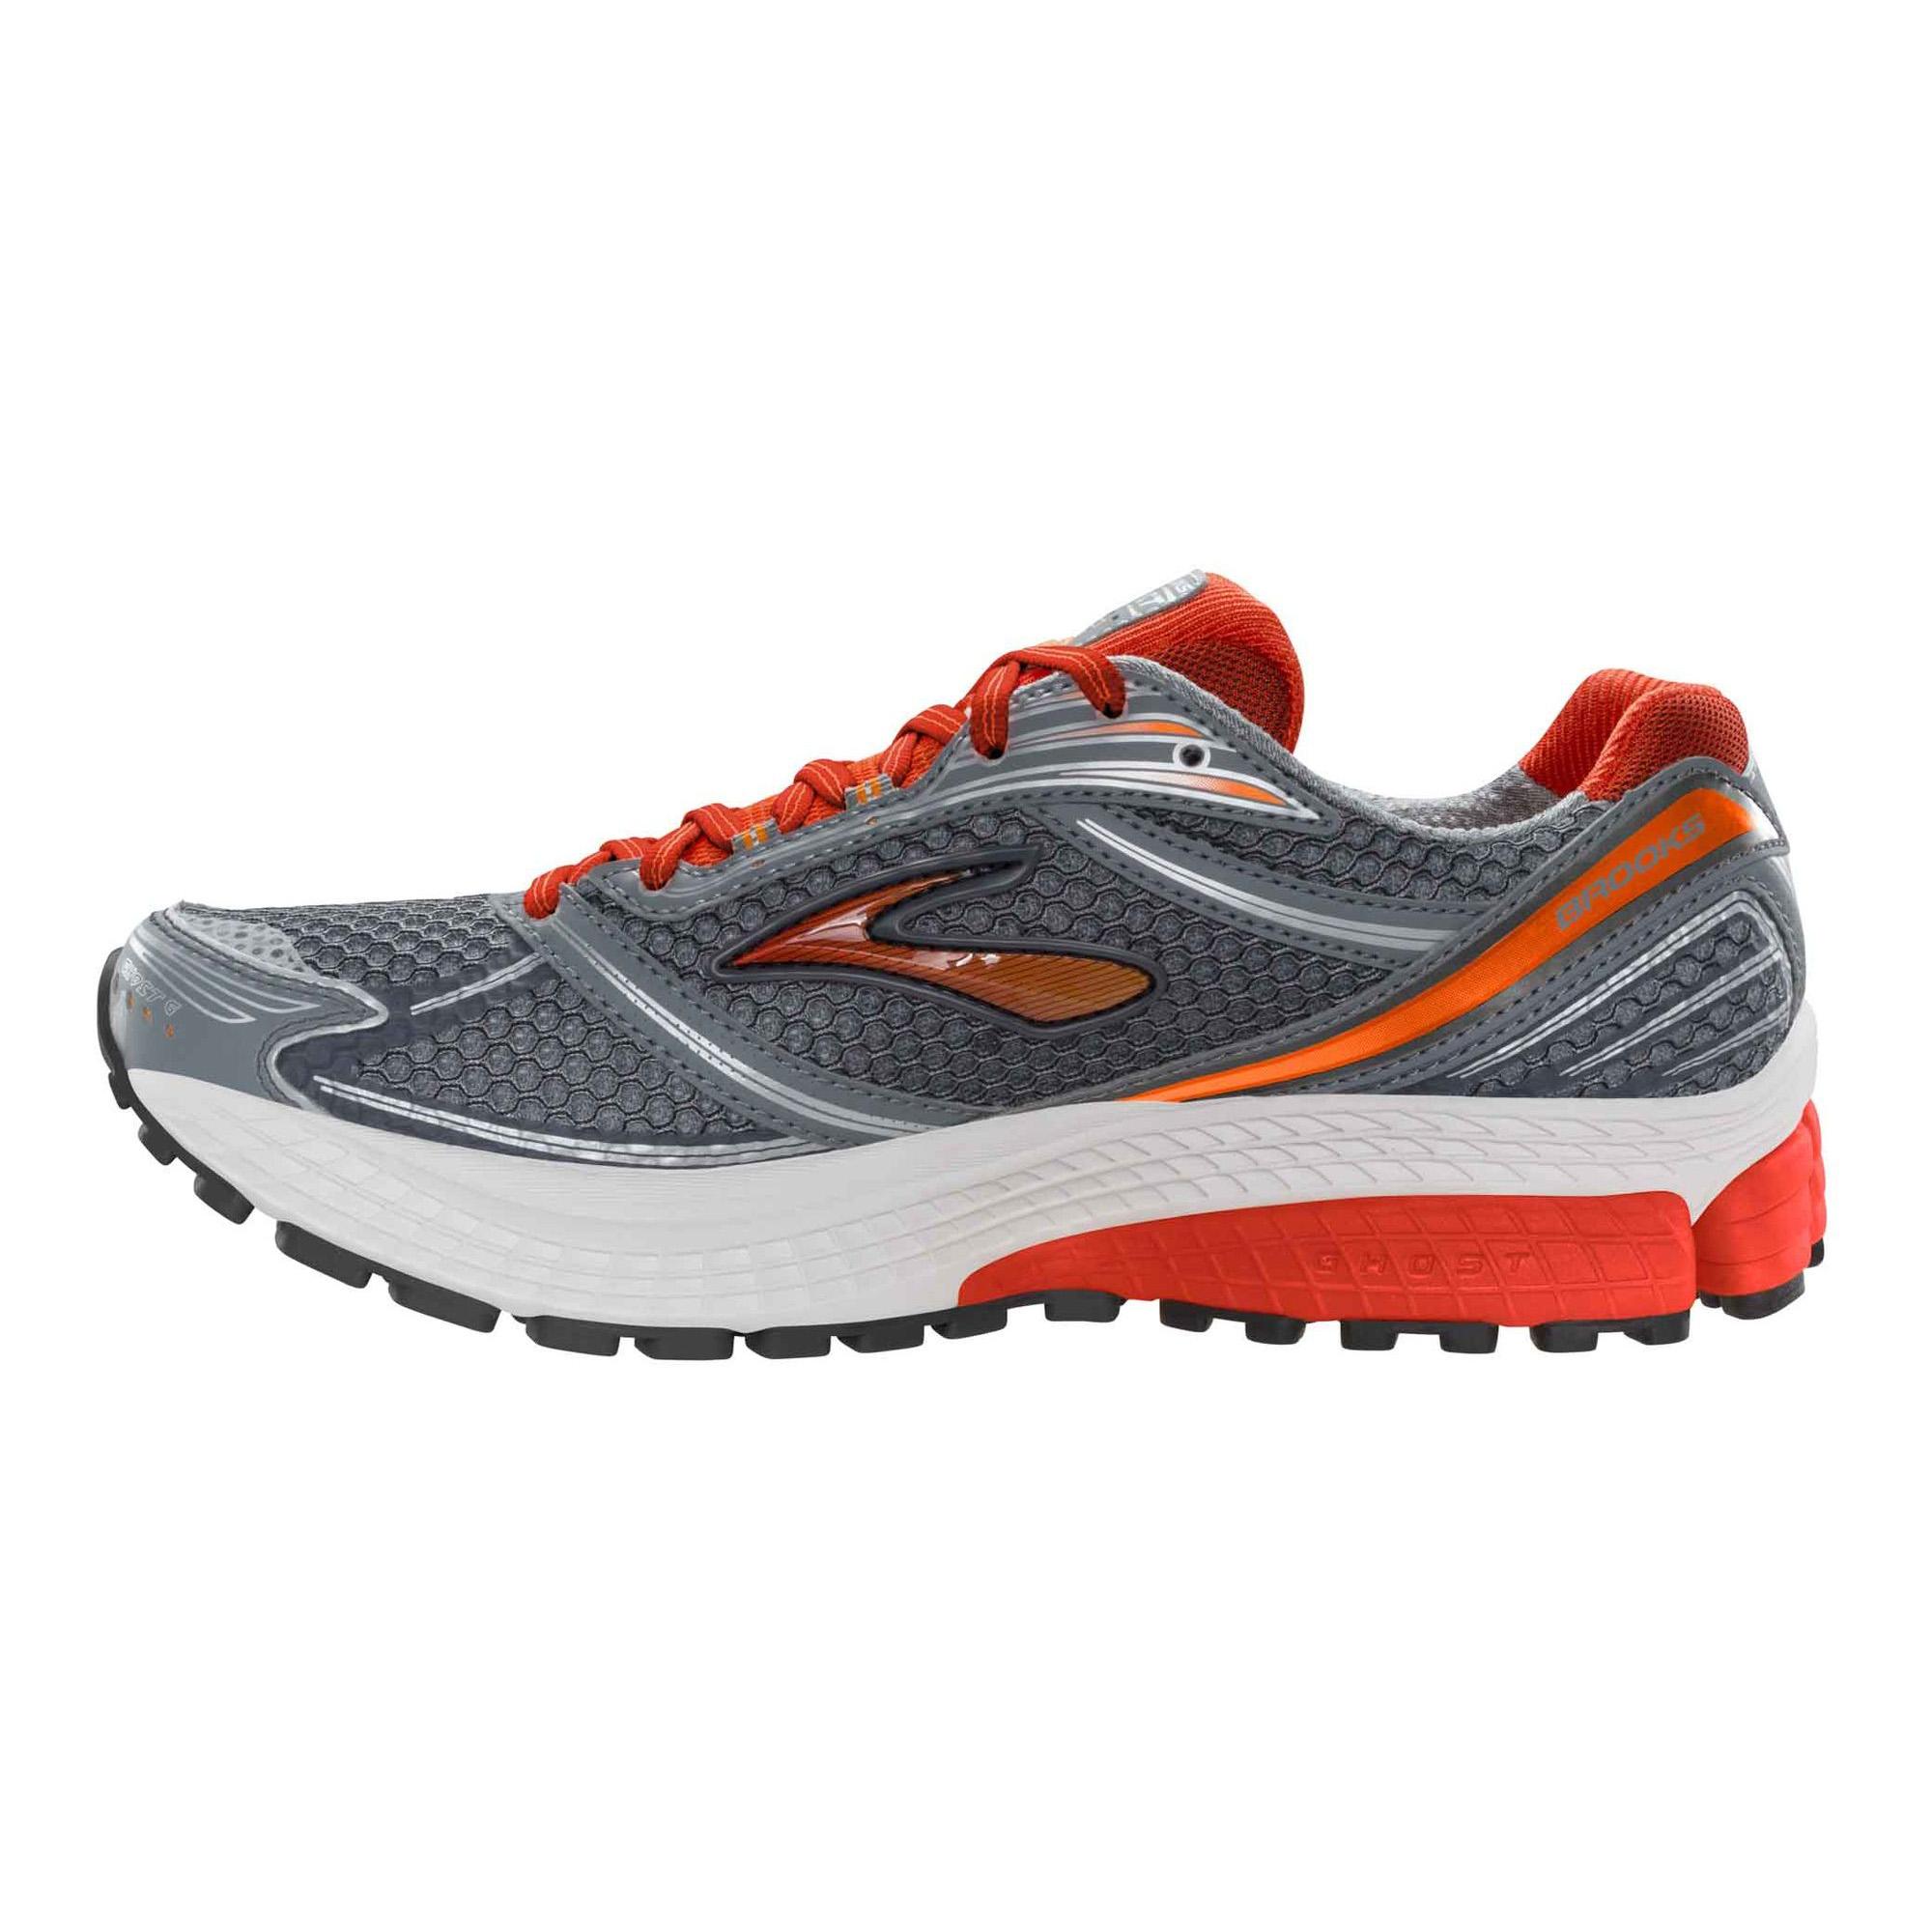 Brooks Mens Ghost 6 Running Shoes - Grey/Orange - Tennisnuts.com